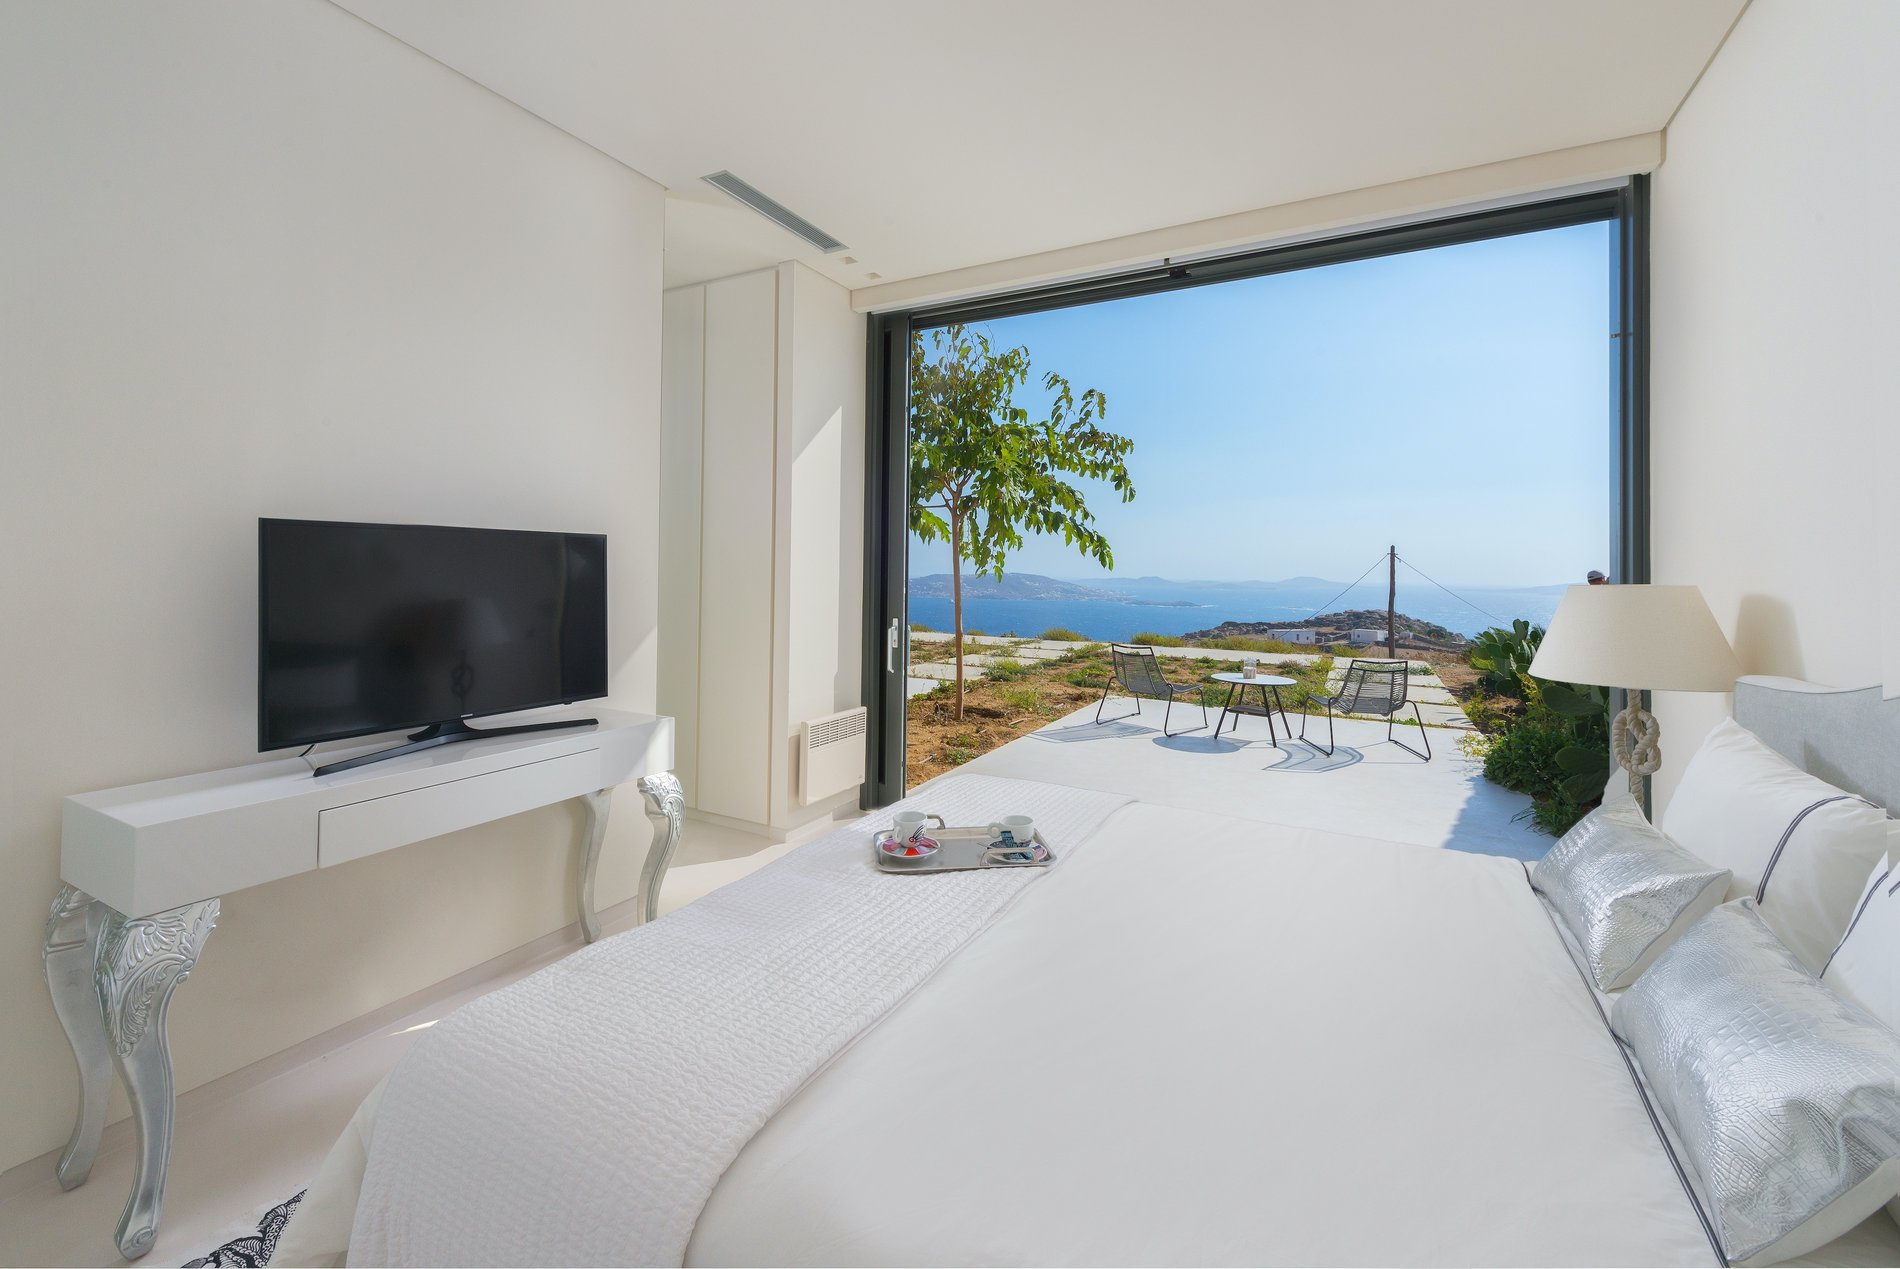 Each bedroom has it's own gliding patio door with Mediterranean views.